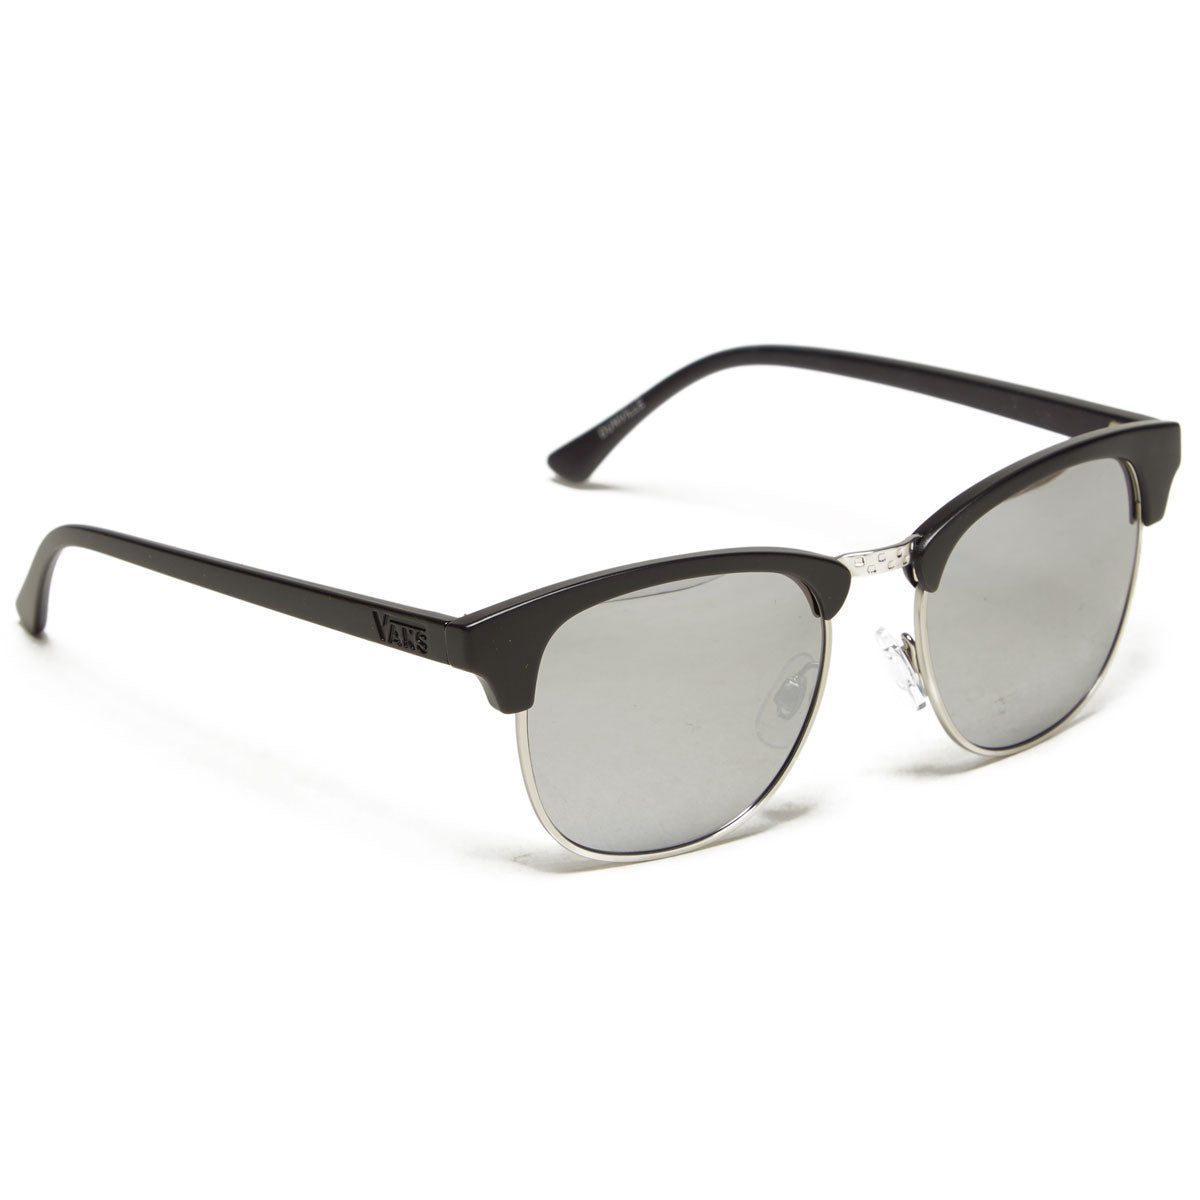 Vans Dunville Sunglasses - Matte Black/Silver Mirror image 1